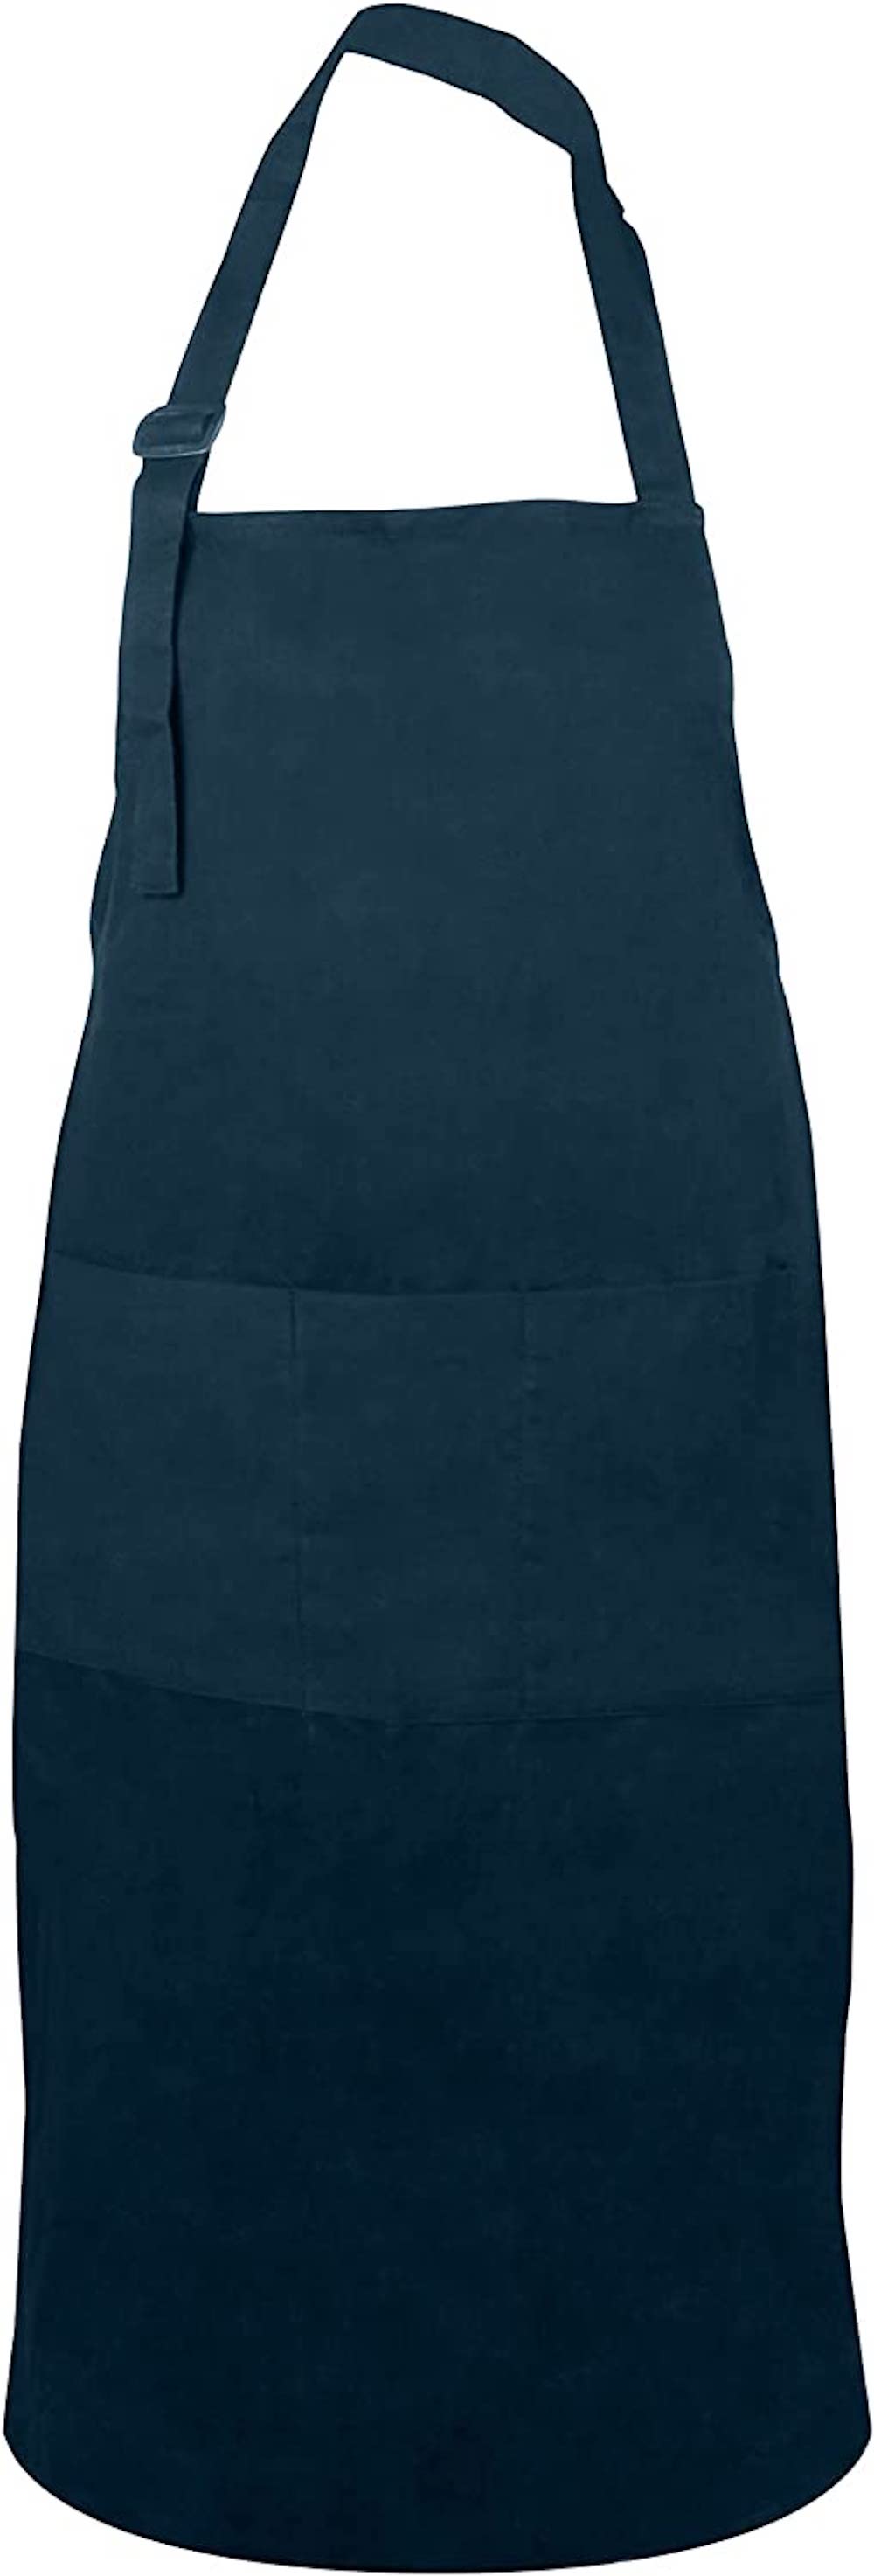 The Bear apron